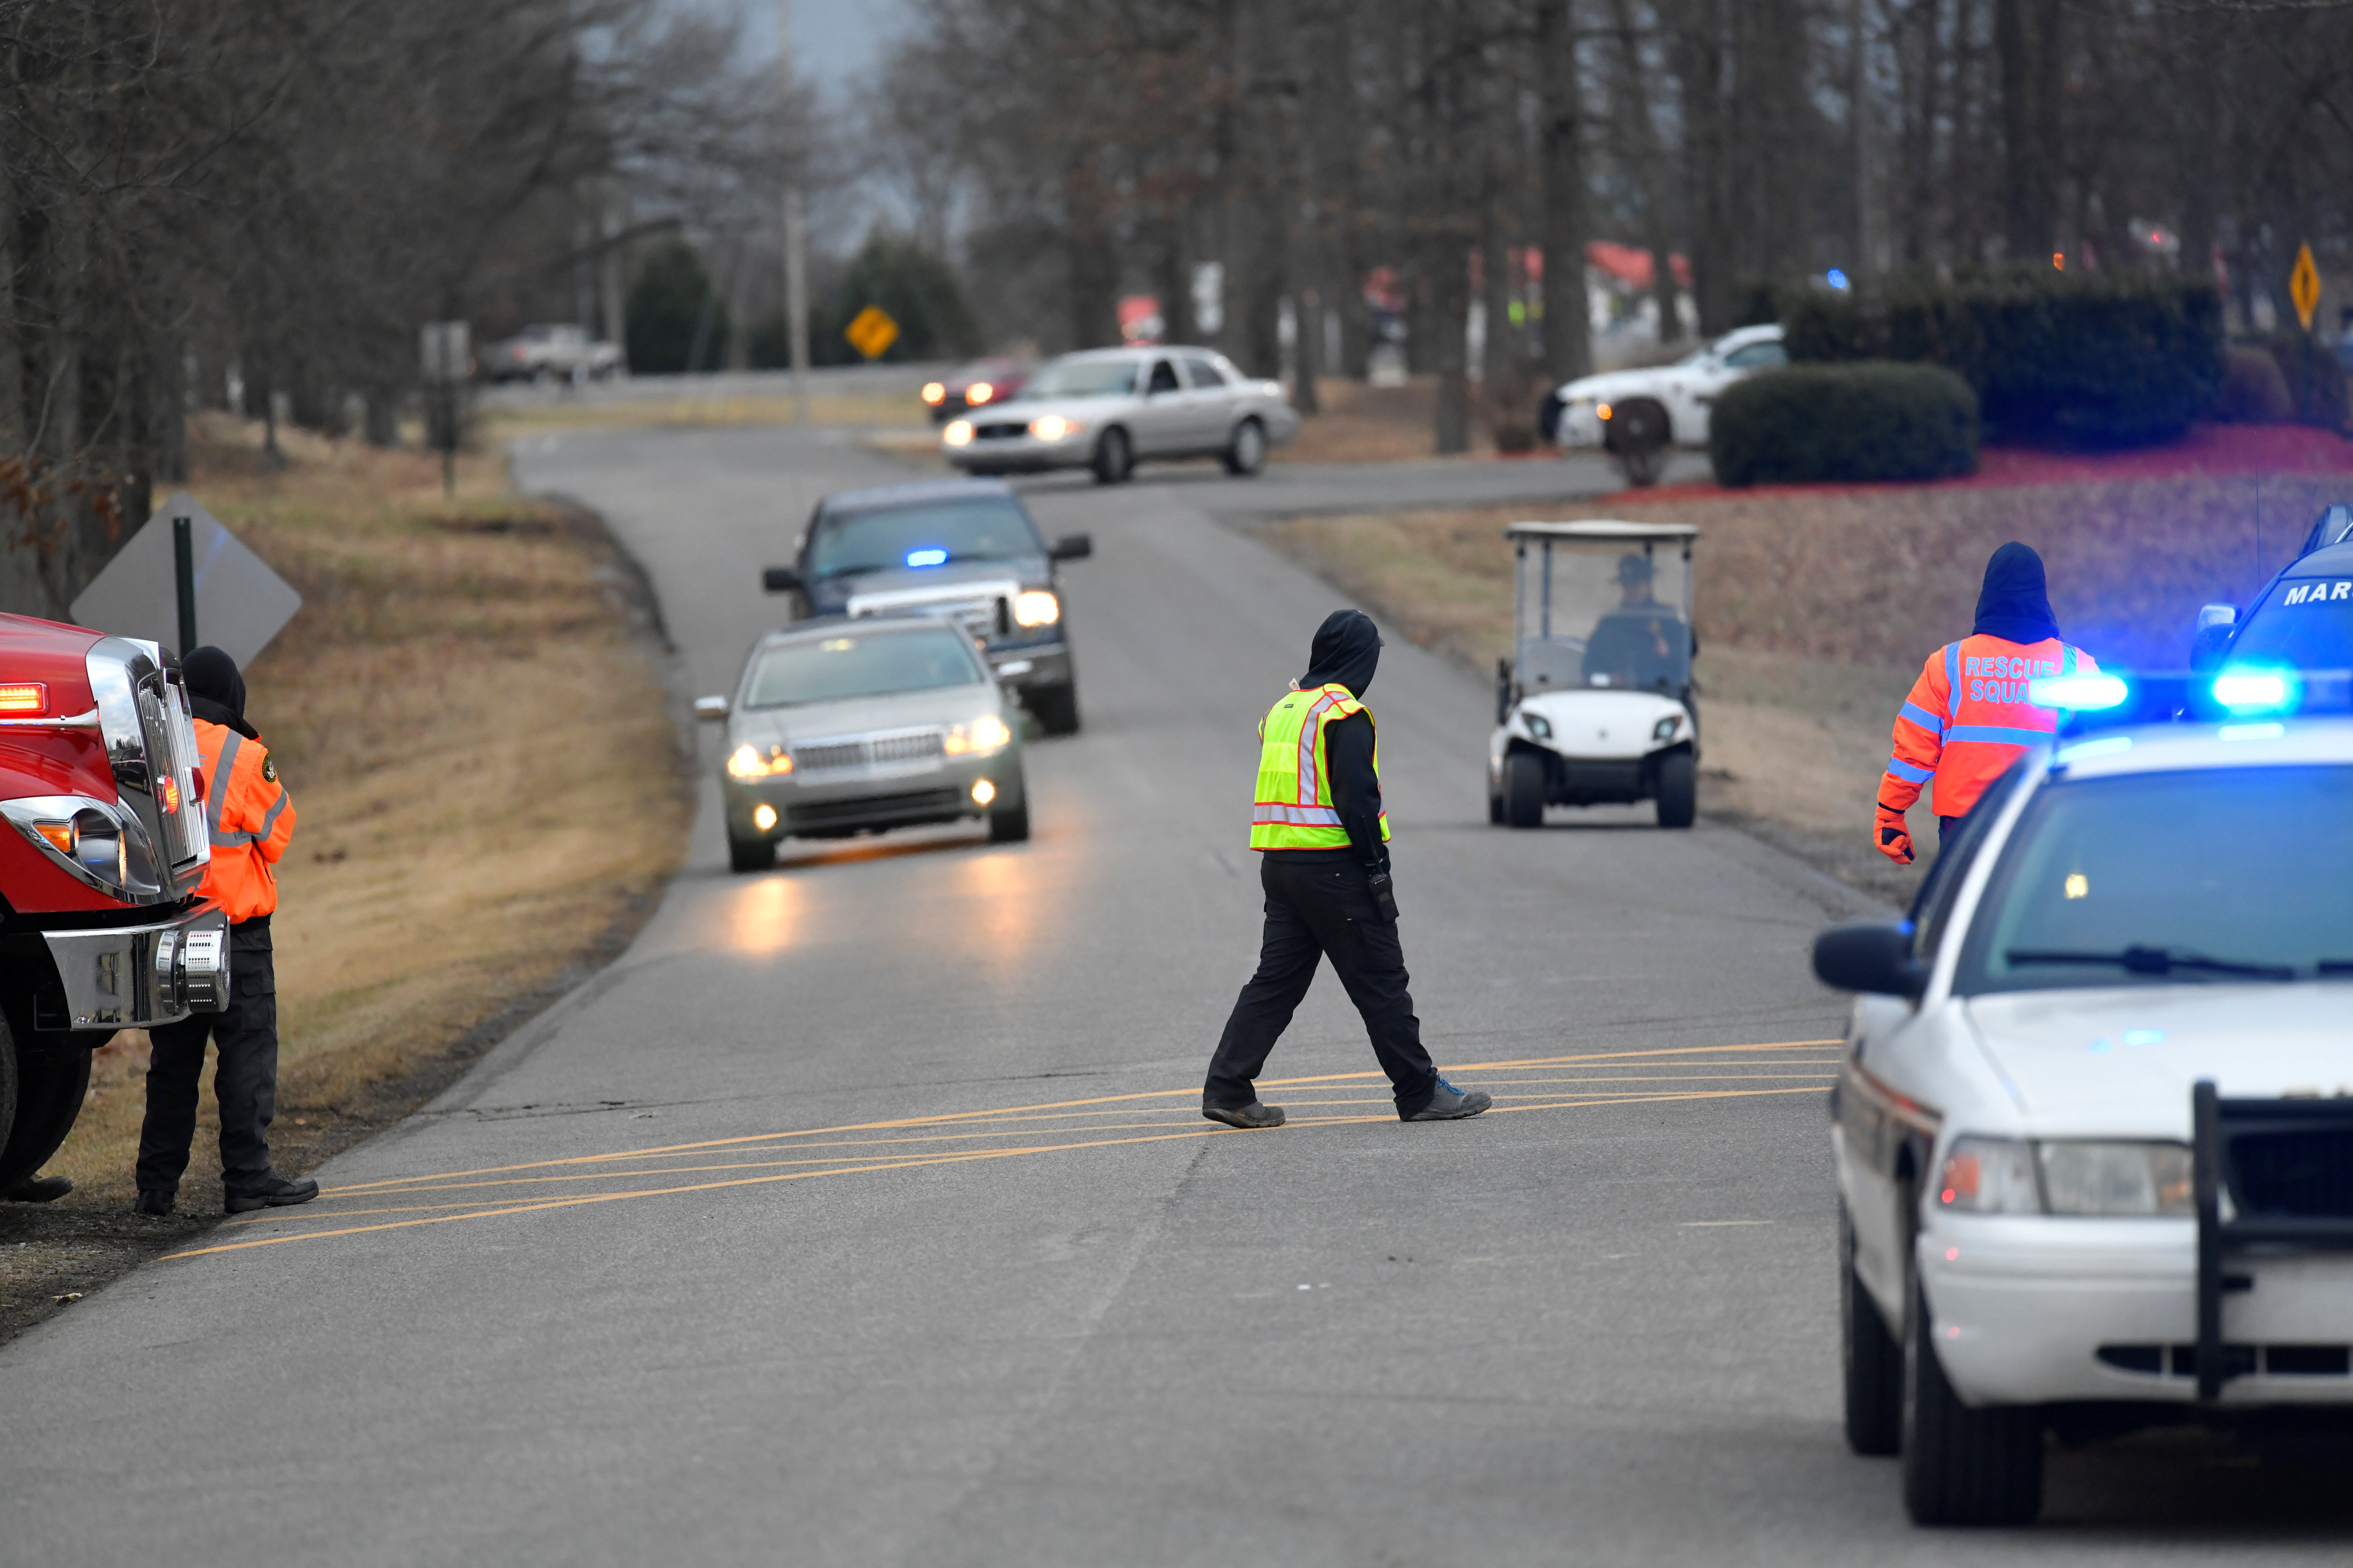 15-year-old boy kills two, injures 13 at Kentucky school